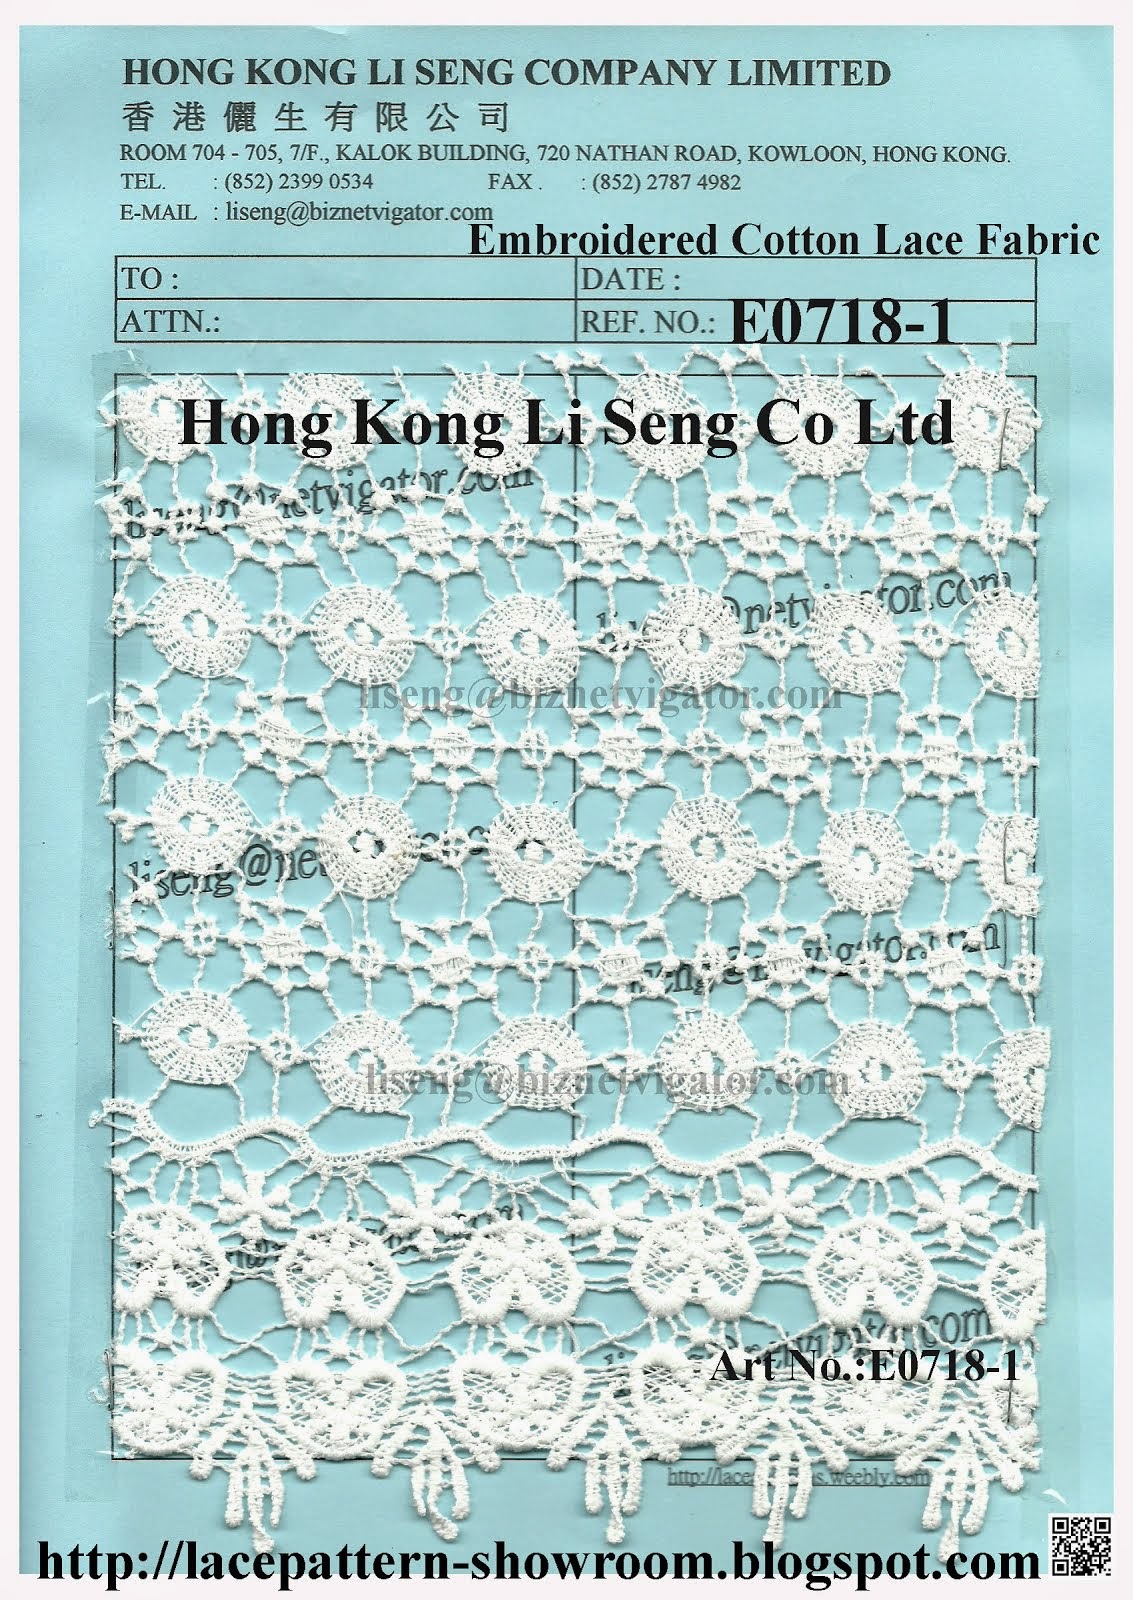 Embroidered Cotton Lace Fabric Manufacturer Wholesaler and Supplier - " Hong Kong Li Seng Co Ltd "